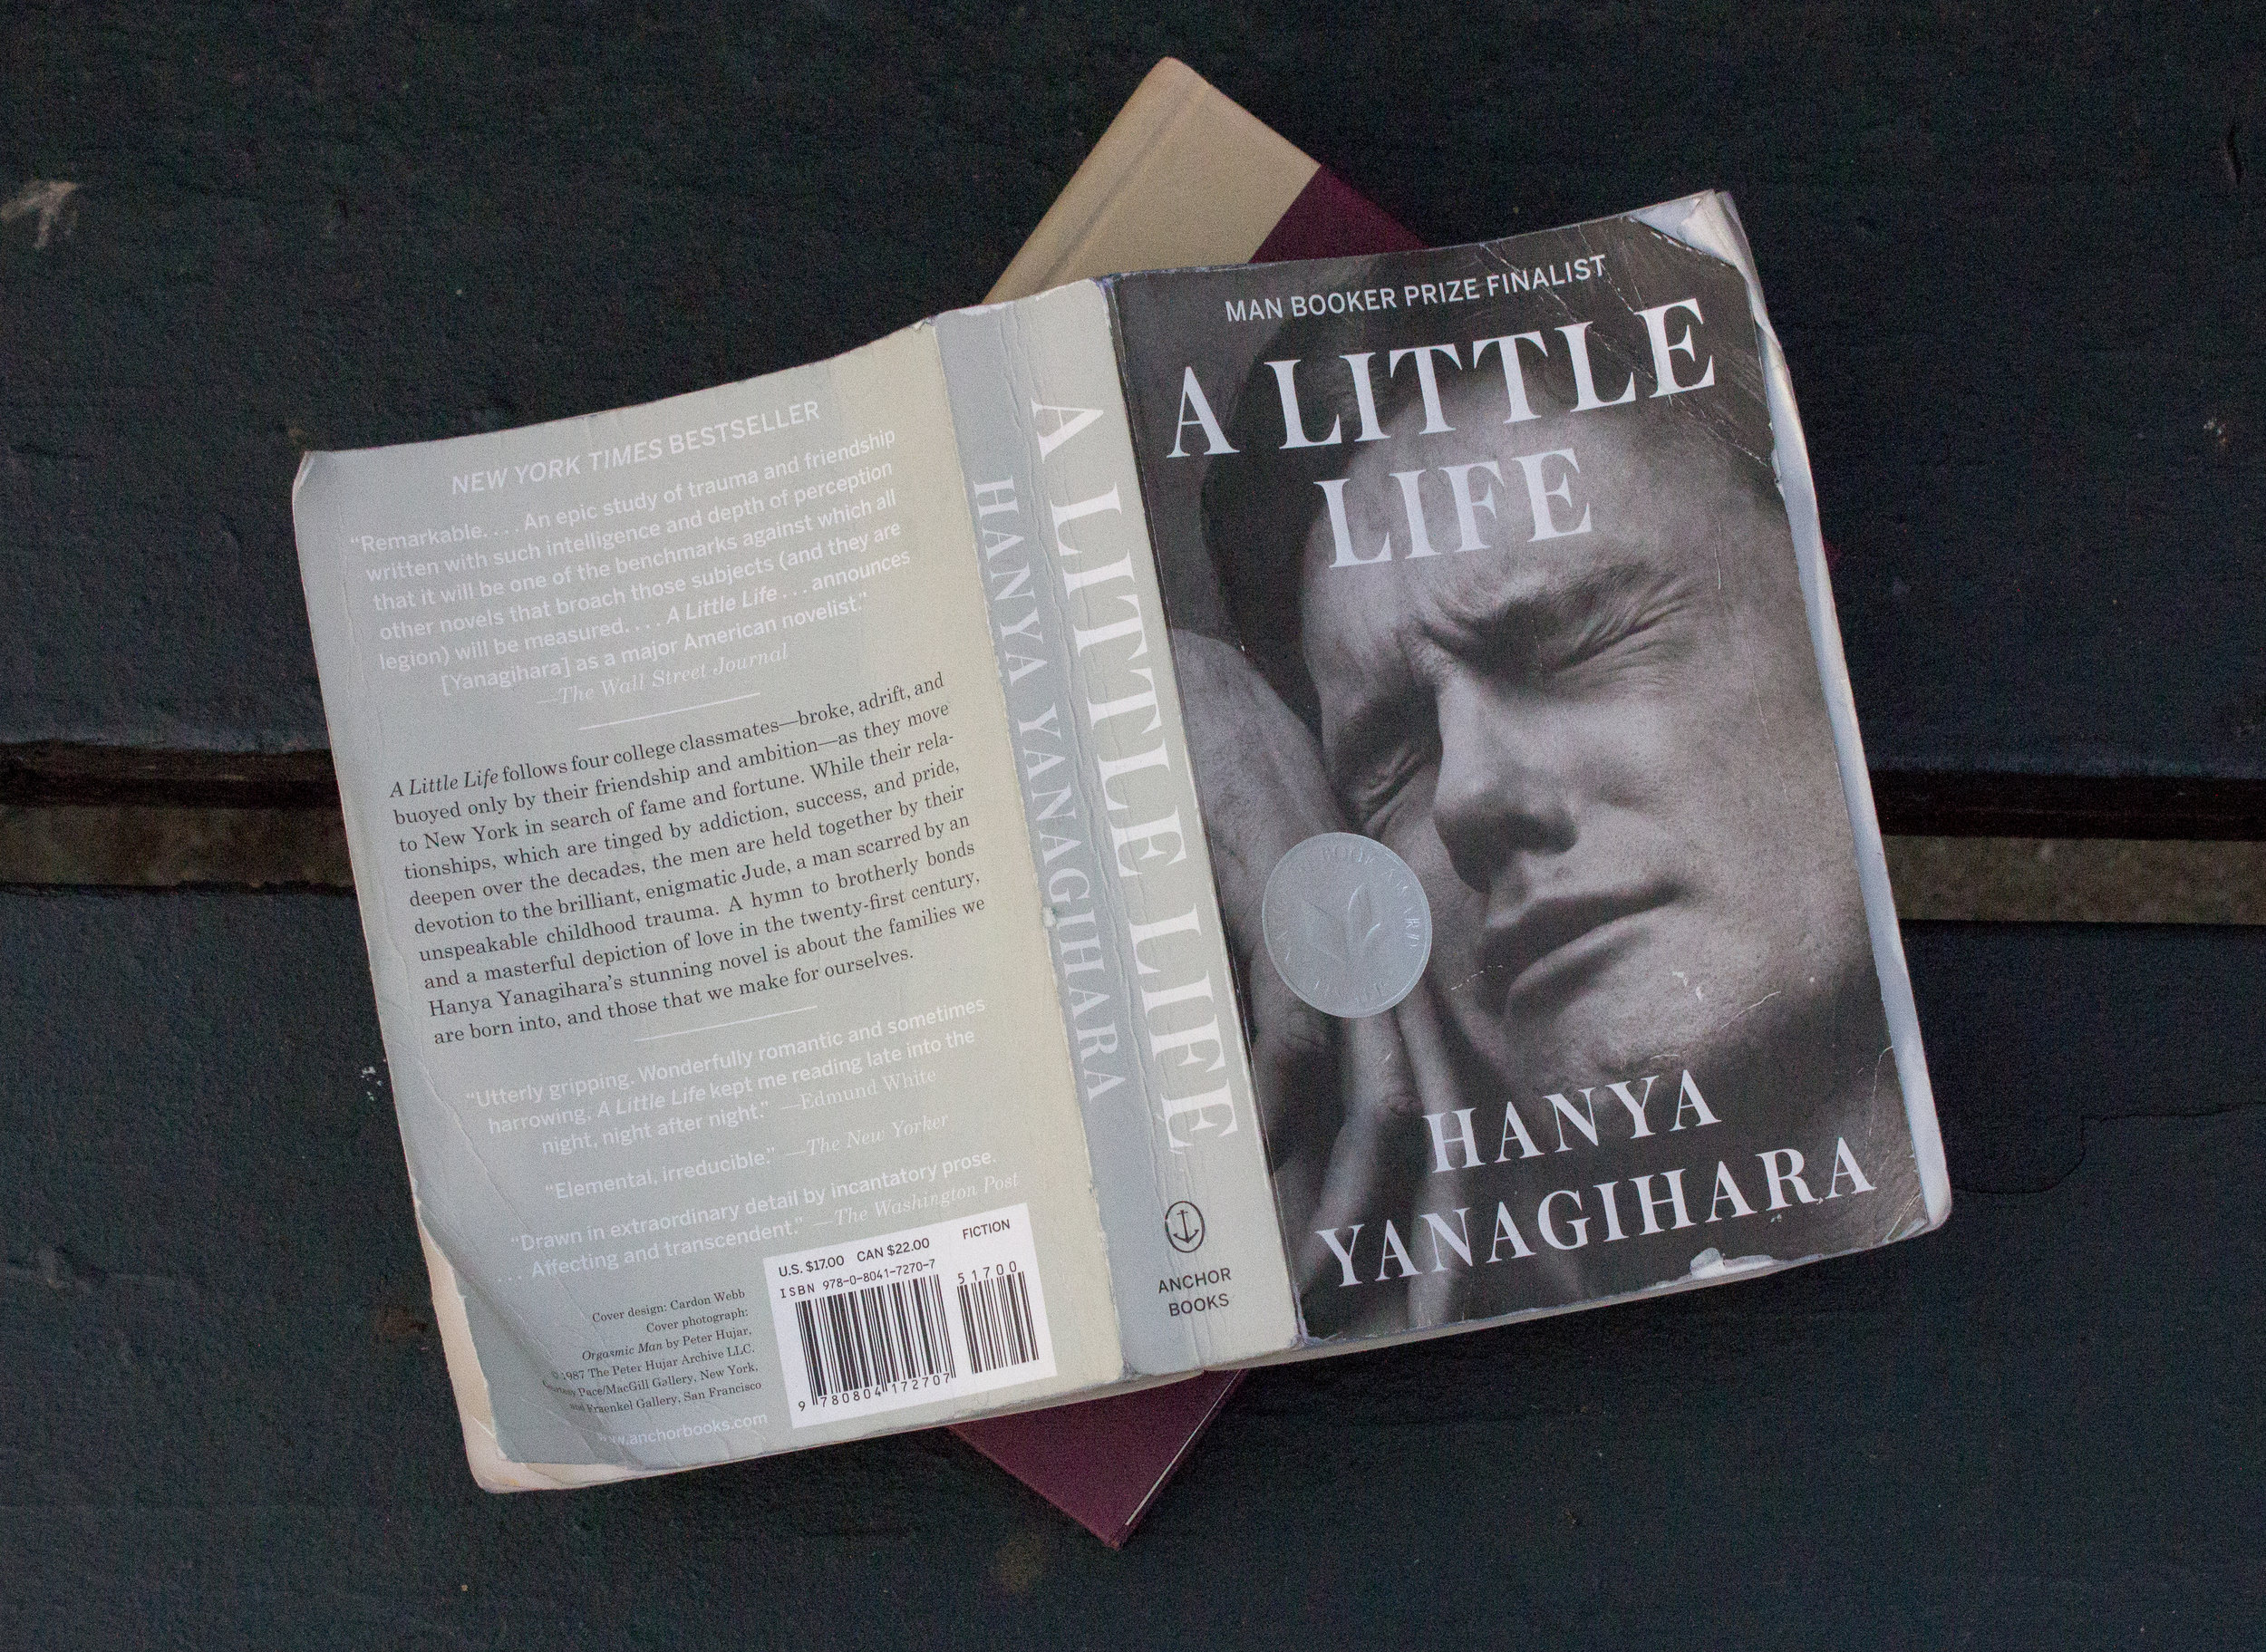 A little Life книга. A little Life hanya Yanagihara. Янагихара книги. Обложка книги a little Life. Little life book